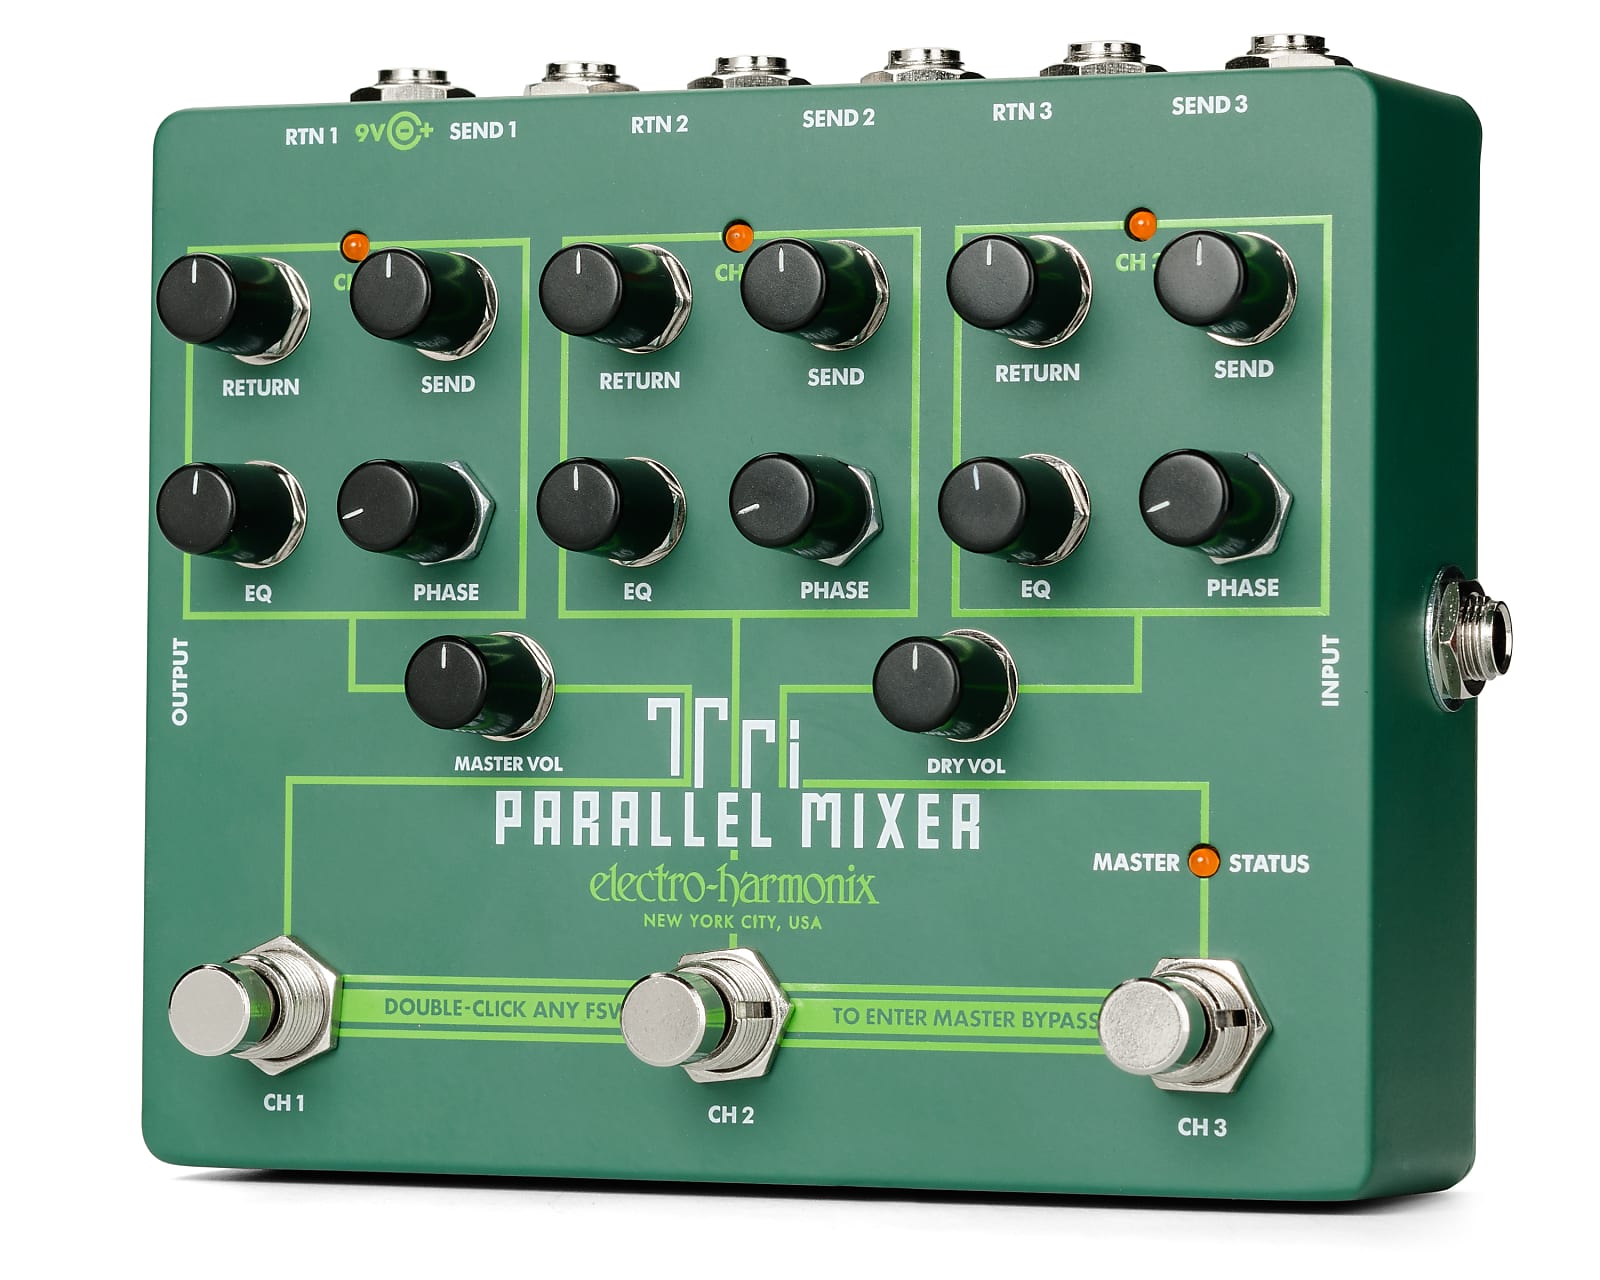 Electro-Harmonix EHX Tri Parallel Mixer Effects Loop Mixer / Switcher Pedal